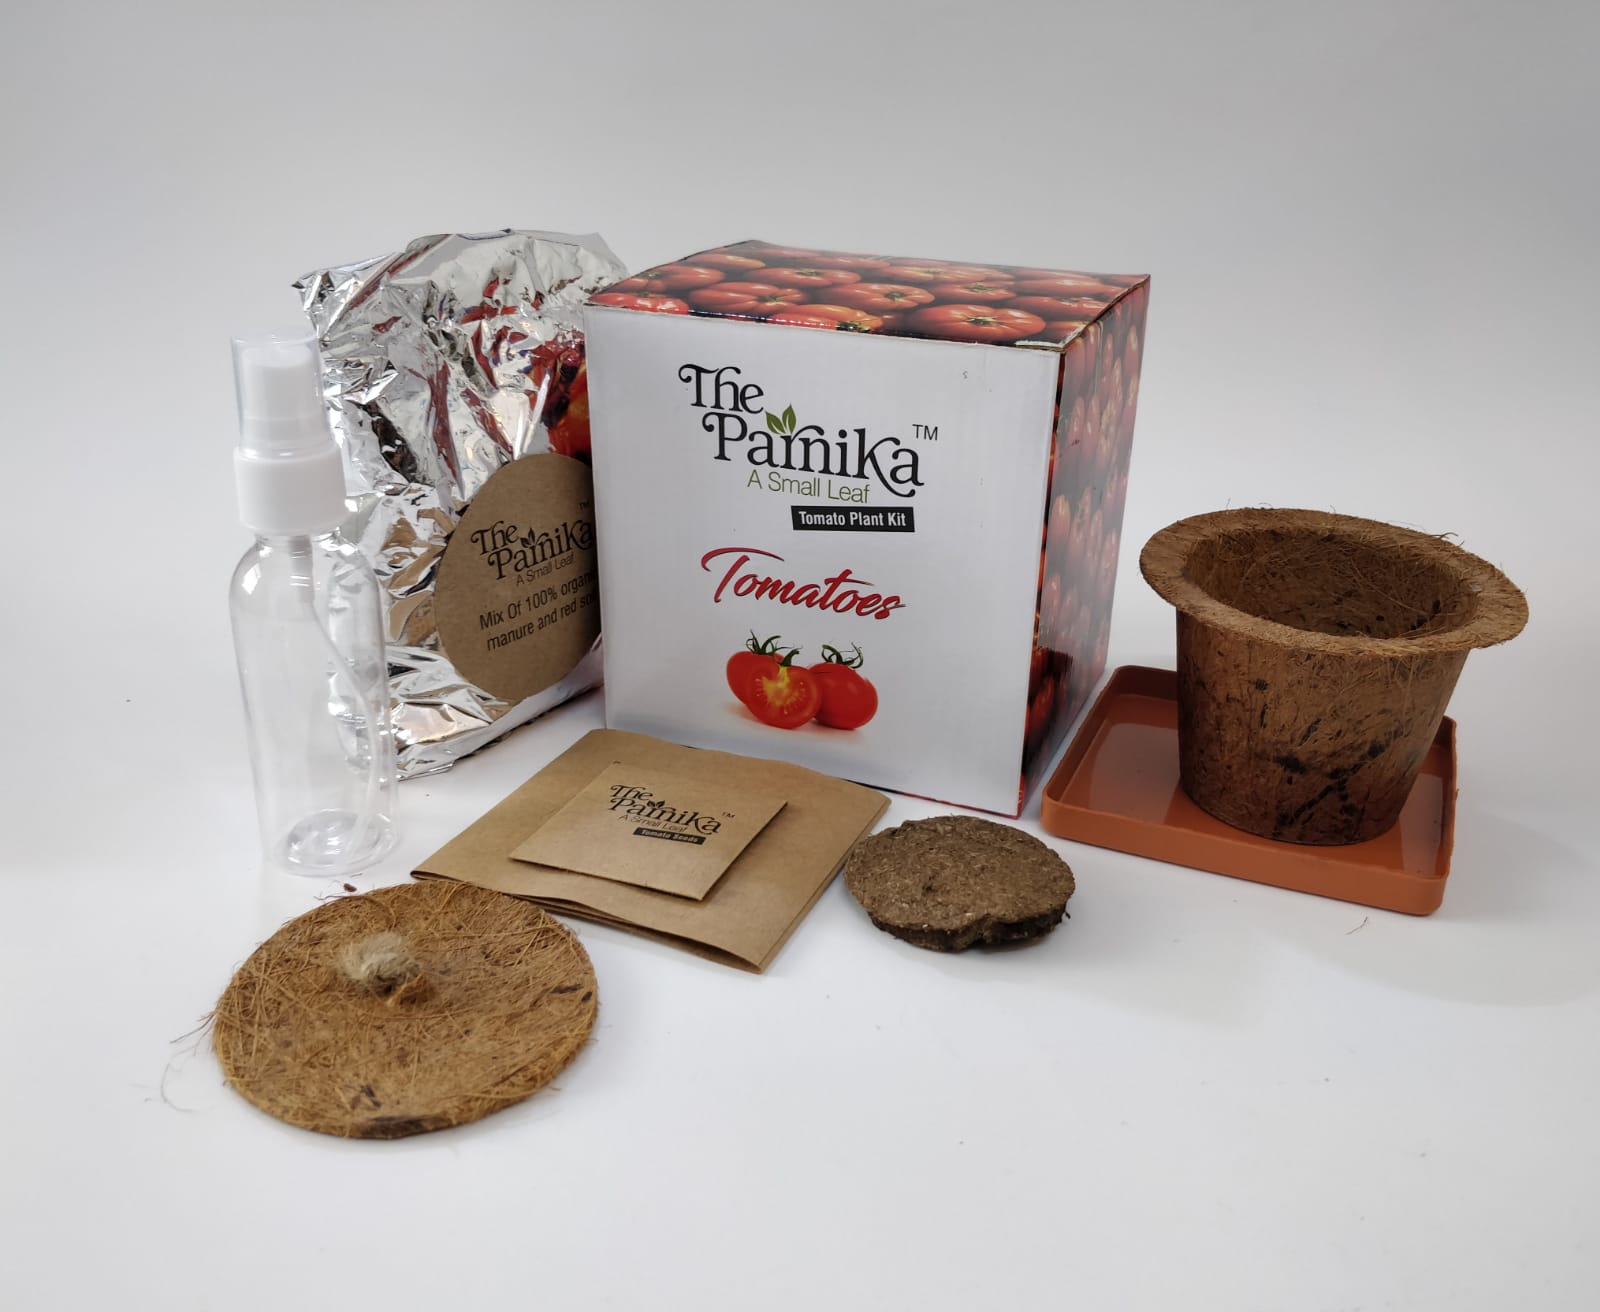 The Parnika DIY Plantation Kit - Tomato